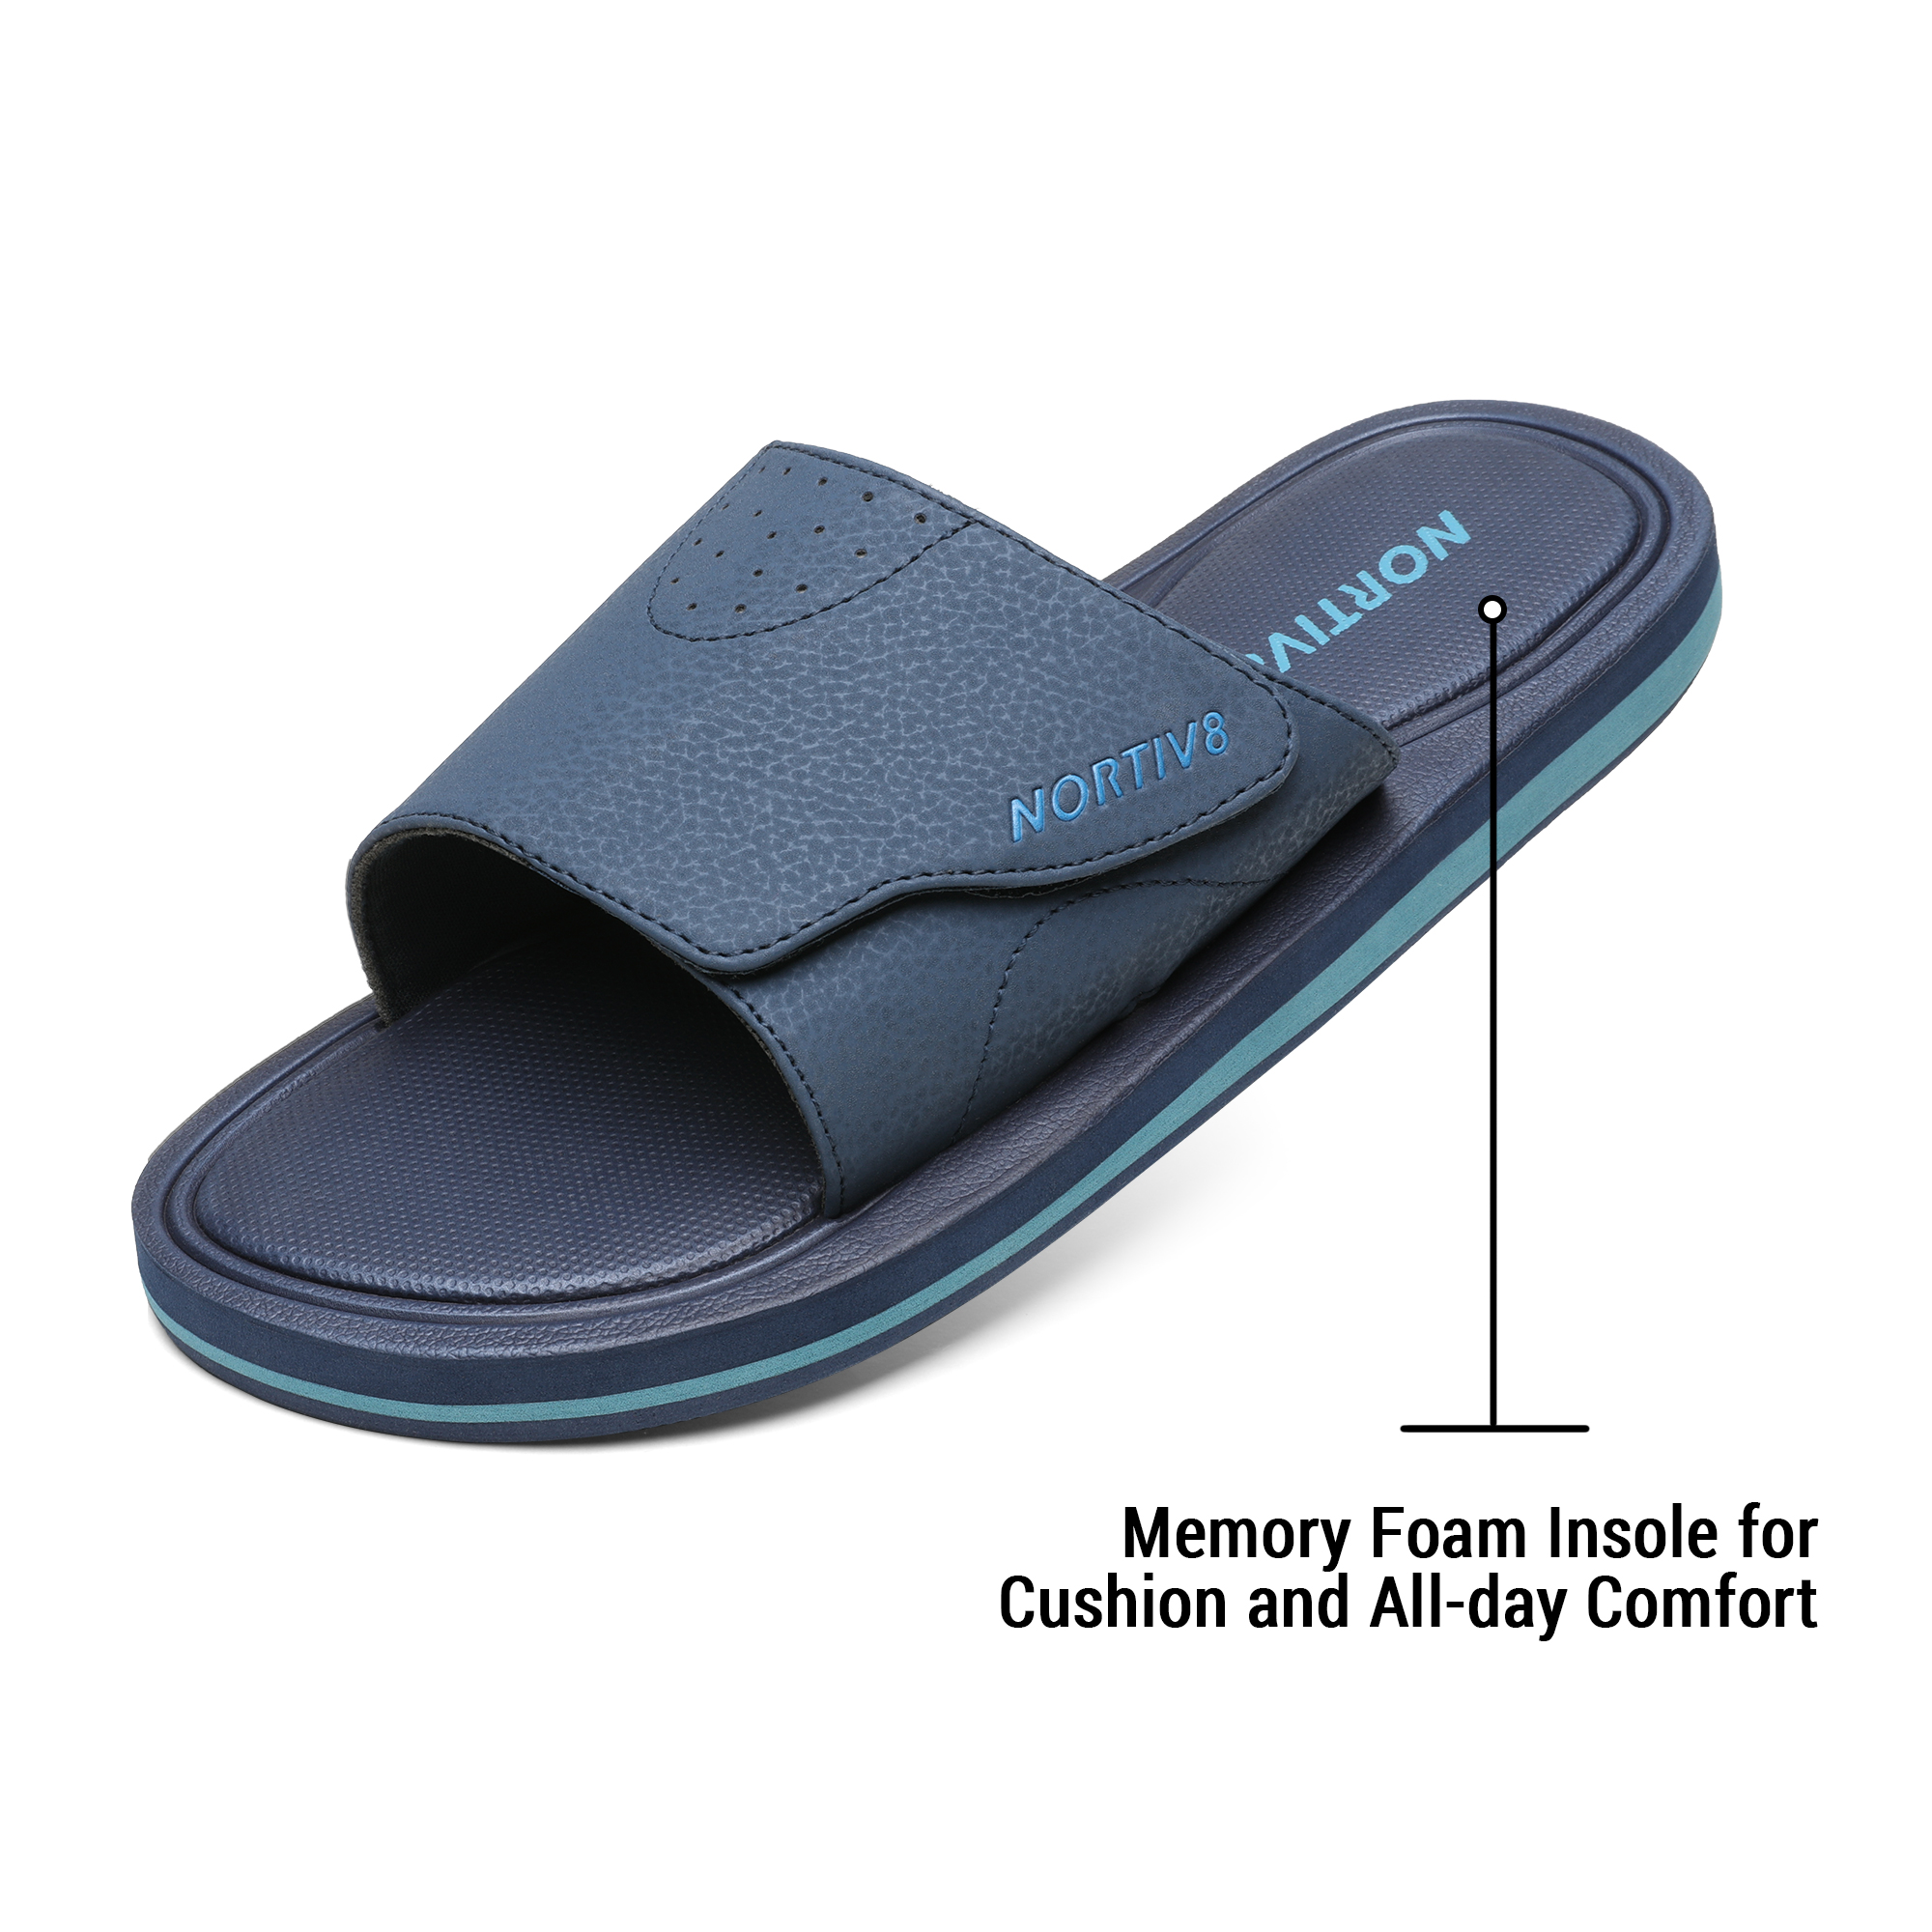 Nortiv8 Men's Memory Foam Adjustable Slide Sandals Comfort Lightweight Summer Beach Sandals Shoes FUSION NAVY Size 15 - image 2 of 5